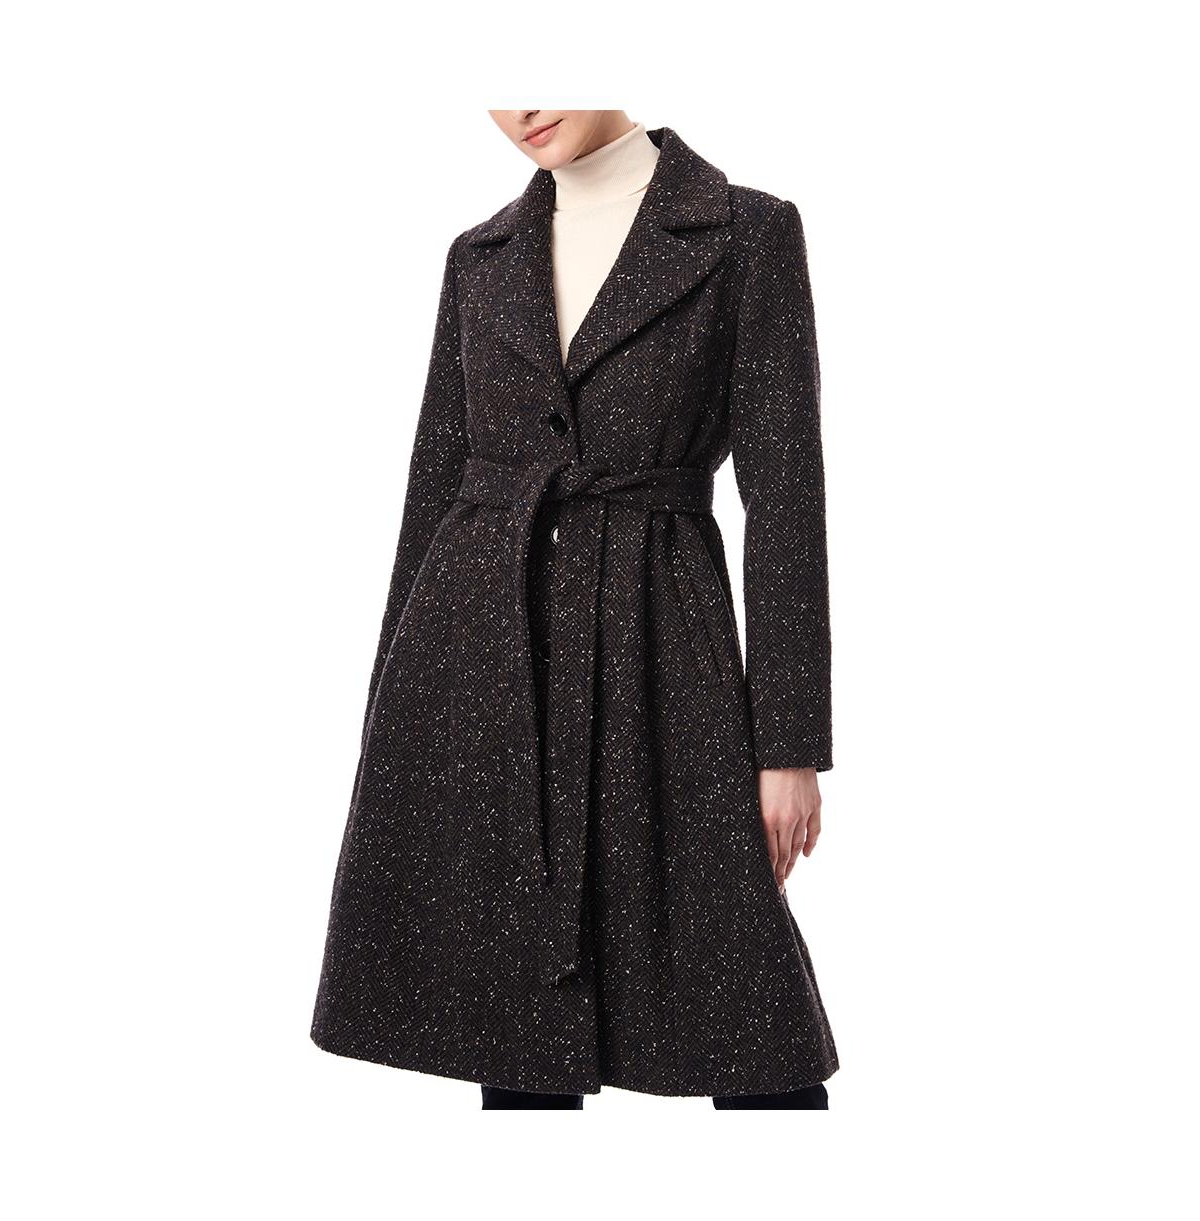 Women's Fit and Flare Tweed Coat - Navy/brown tweed